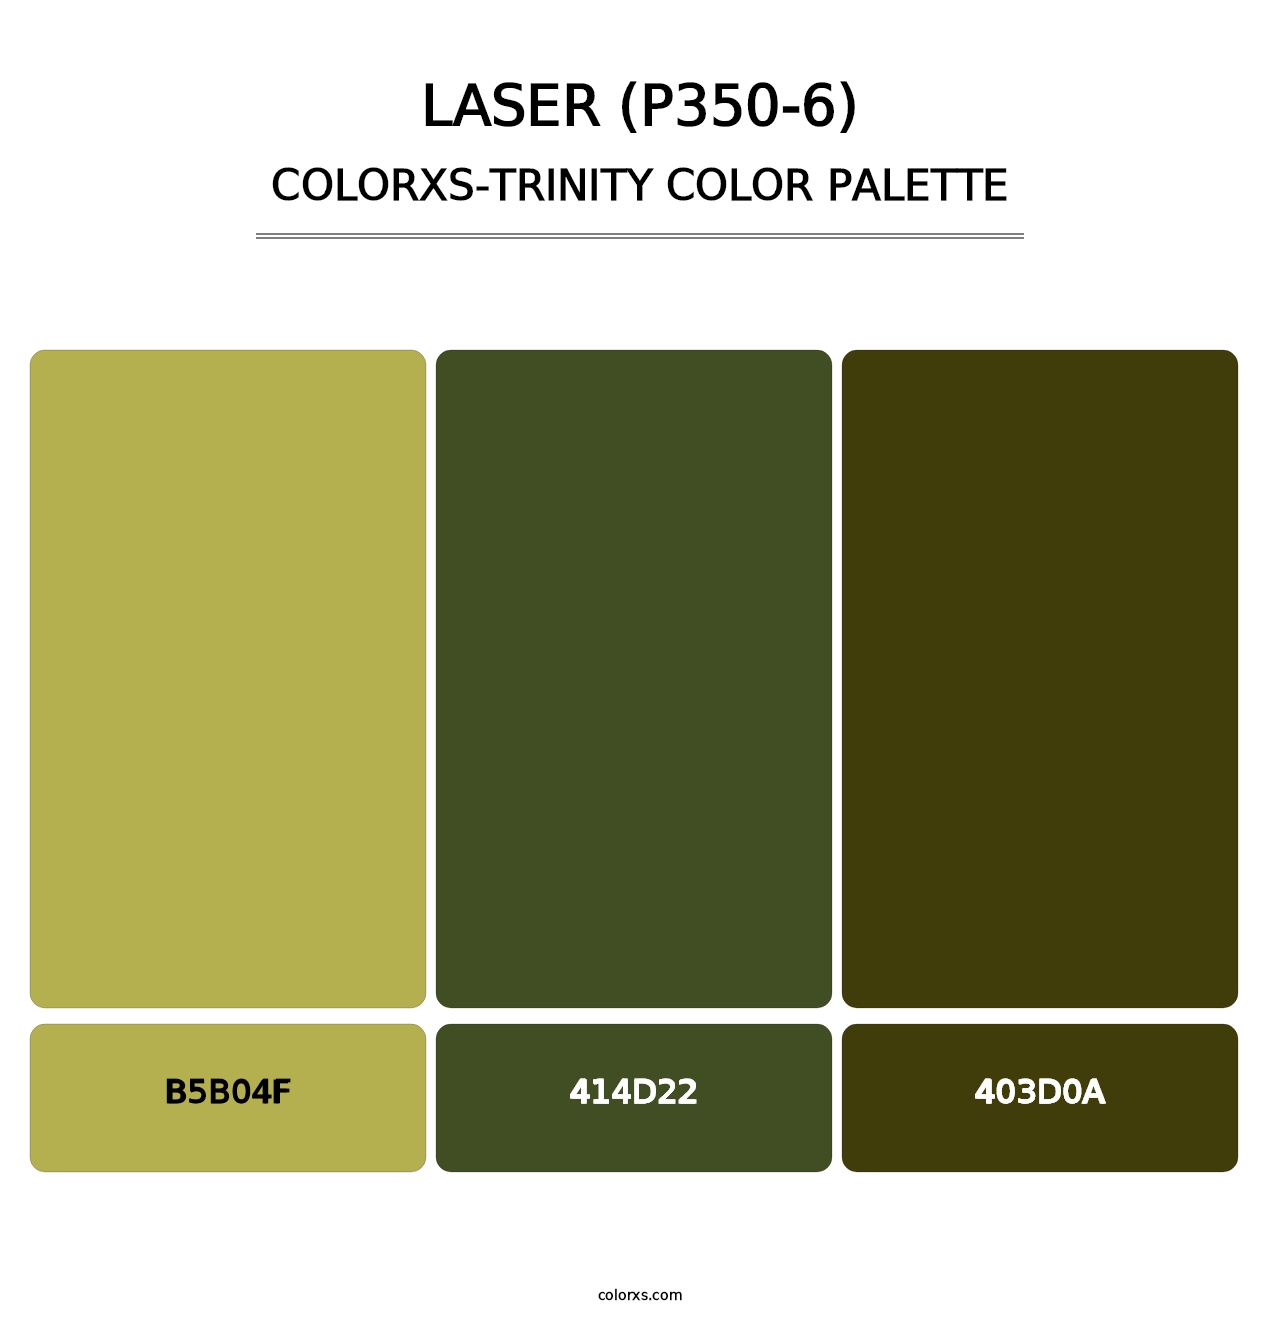 Laser (P350-6) - Colorxs Trinity Palette